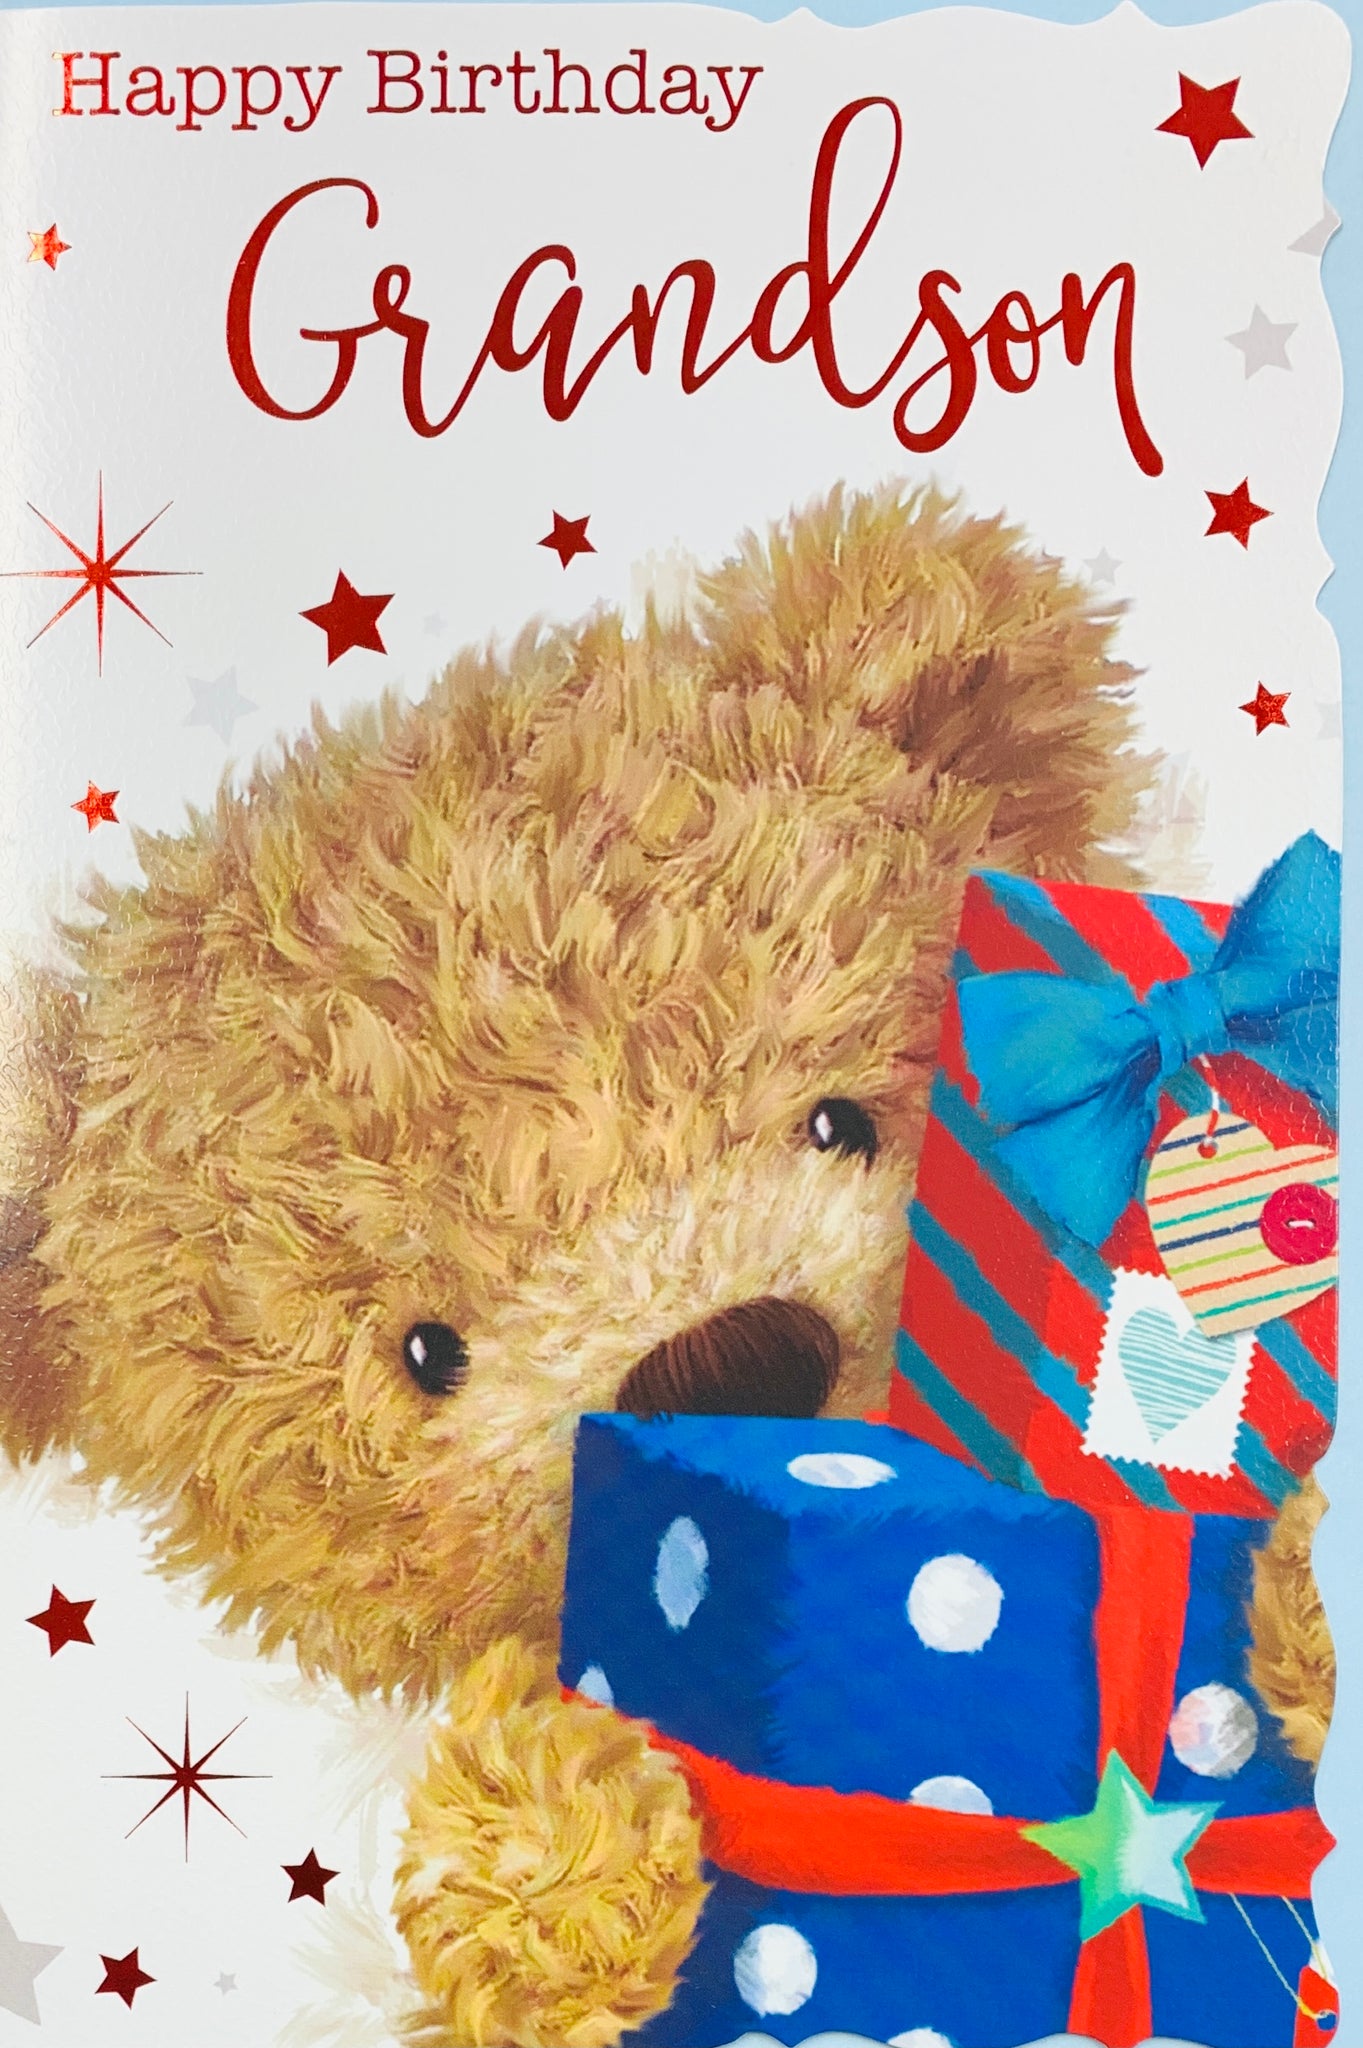 Grandson birthday card - cute bear